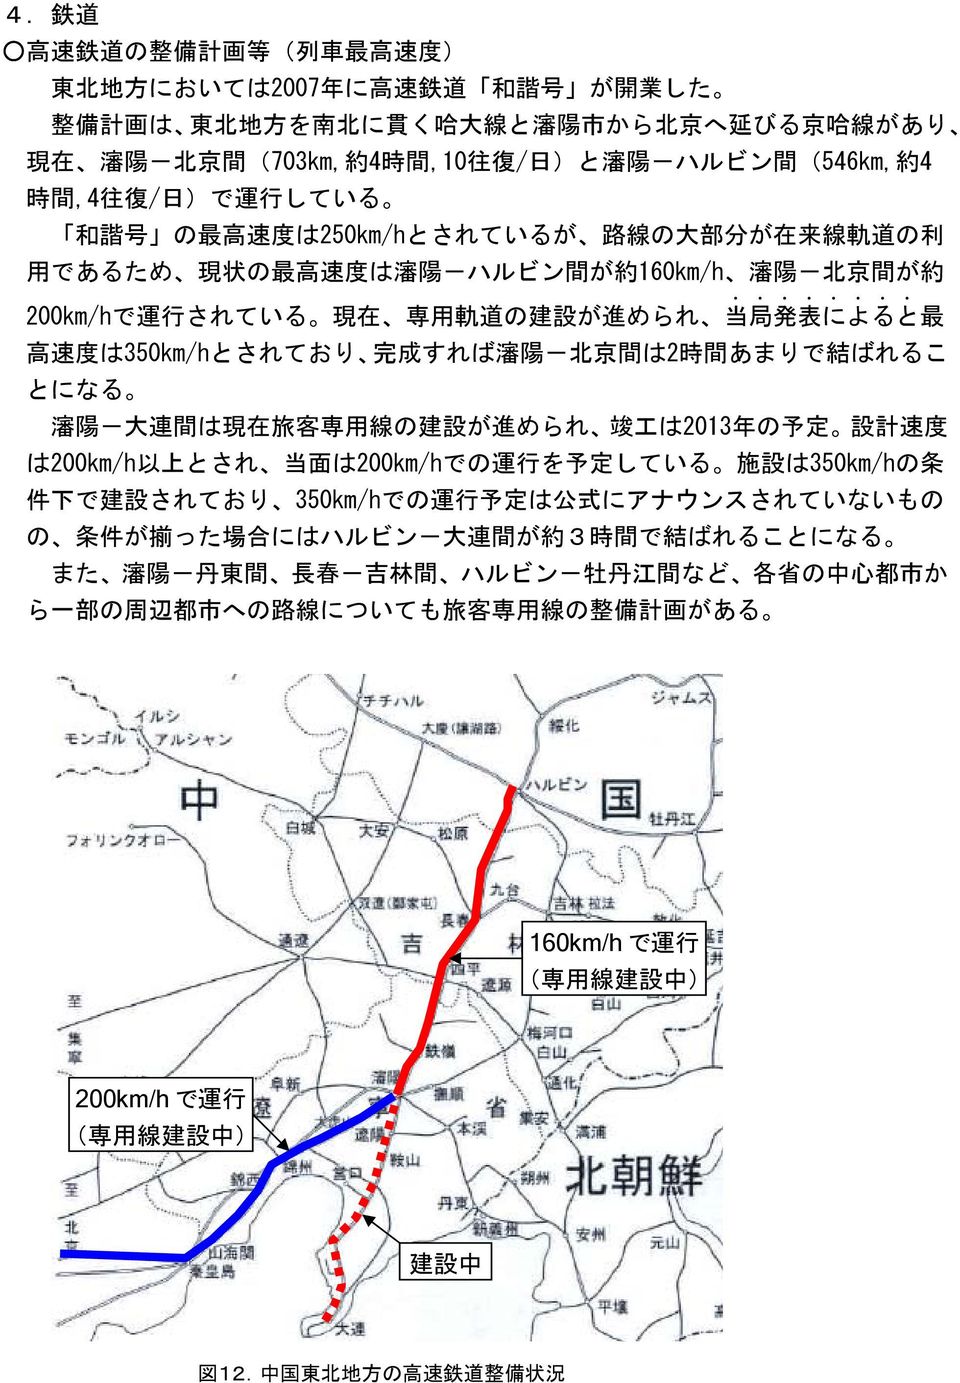 .. 2km/hで 運 行 されている 現 在 専 用 軌 道 の 建 設 が 進 められ 当 局 発 表 によると最 高 速 度 は35km/hとされており 完 成 すれば 瀋 陽 - 北 京 間 は2 時 間 あまりで 結 ばれるこ とになる 瀋 陽 - 大 連 間 は 現 在 旅 客 専 用 線 の 建 設 が 進 められ 竣 工 は213 年 の 予 定 設 計 速 度 は2km/h 以